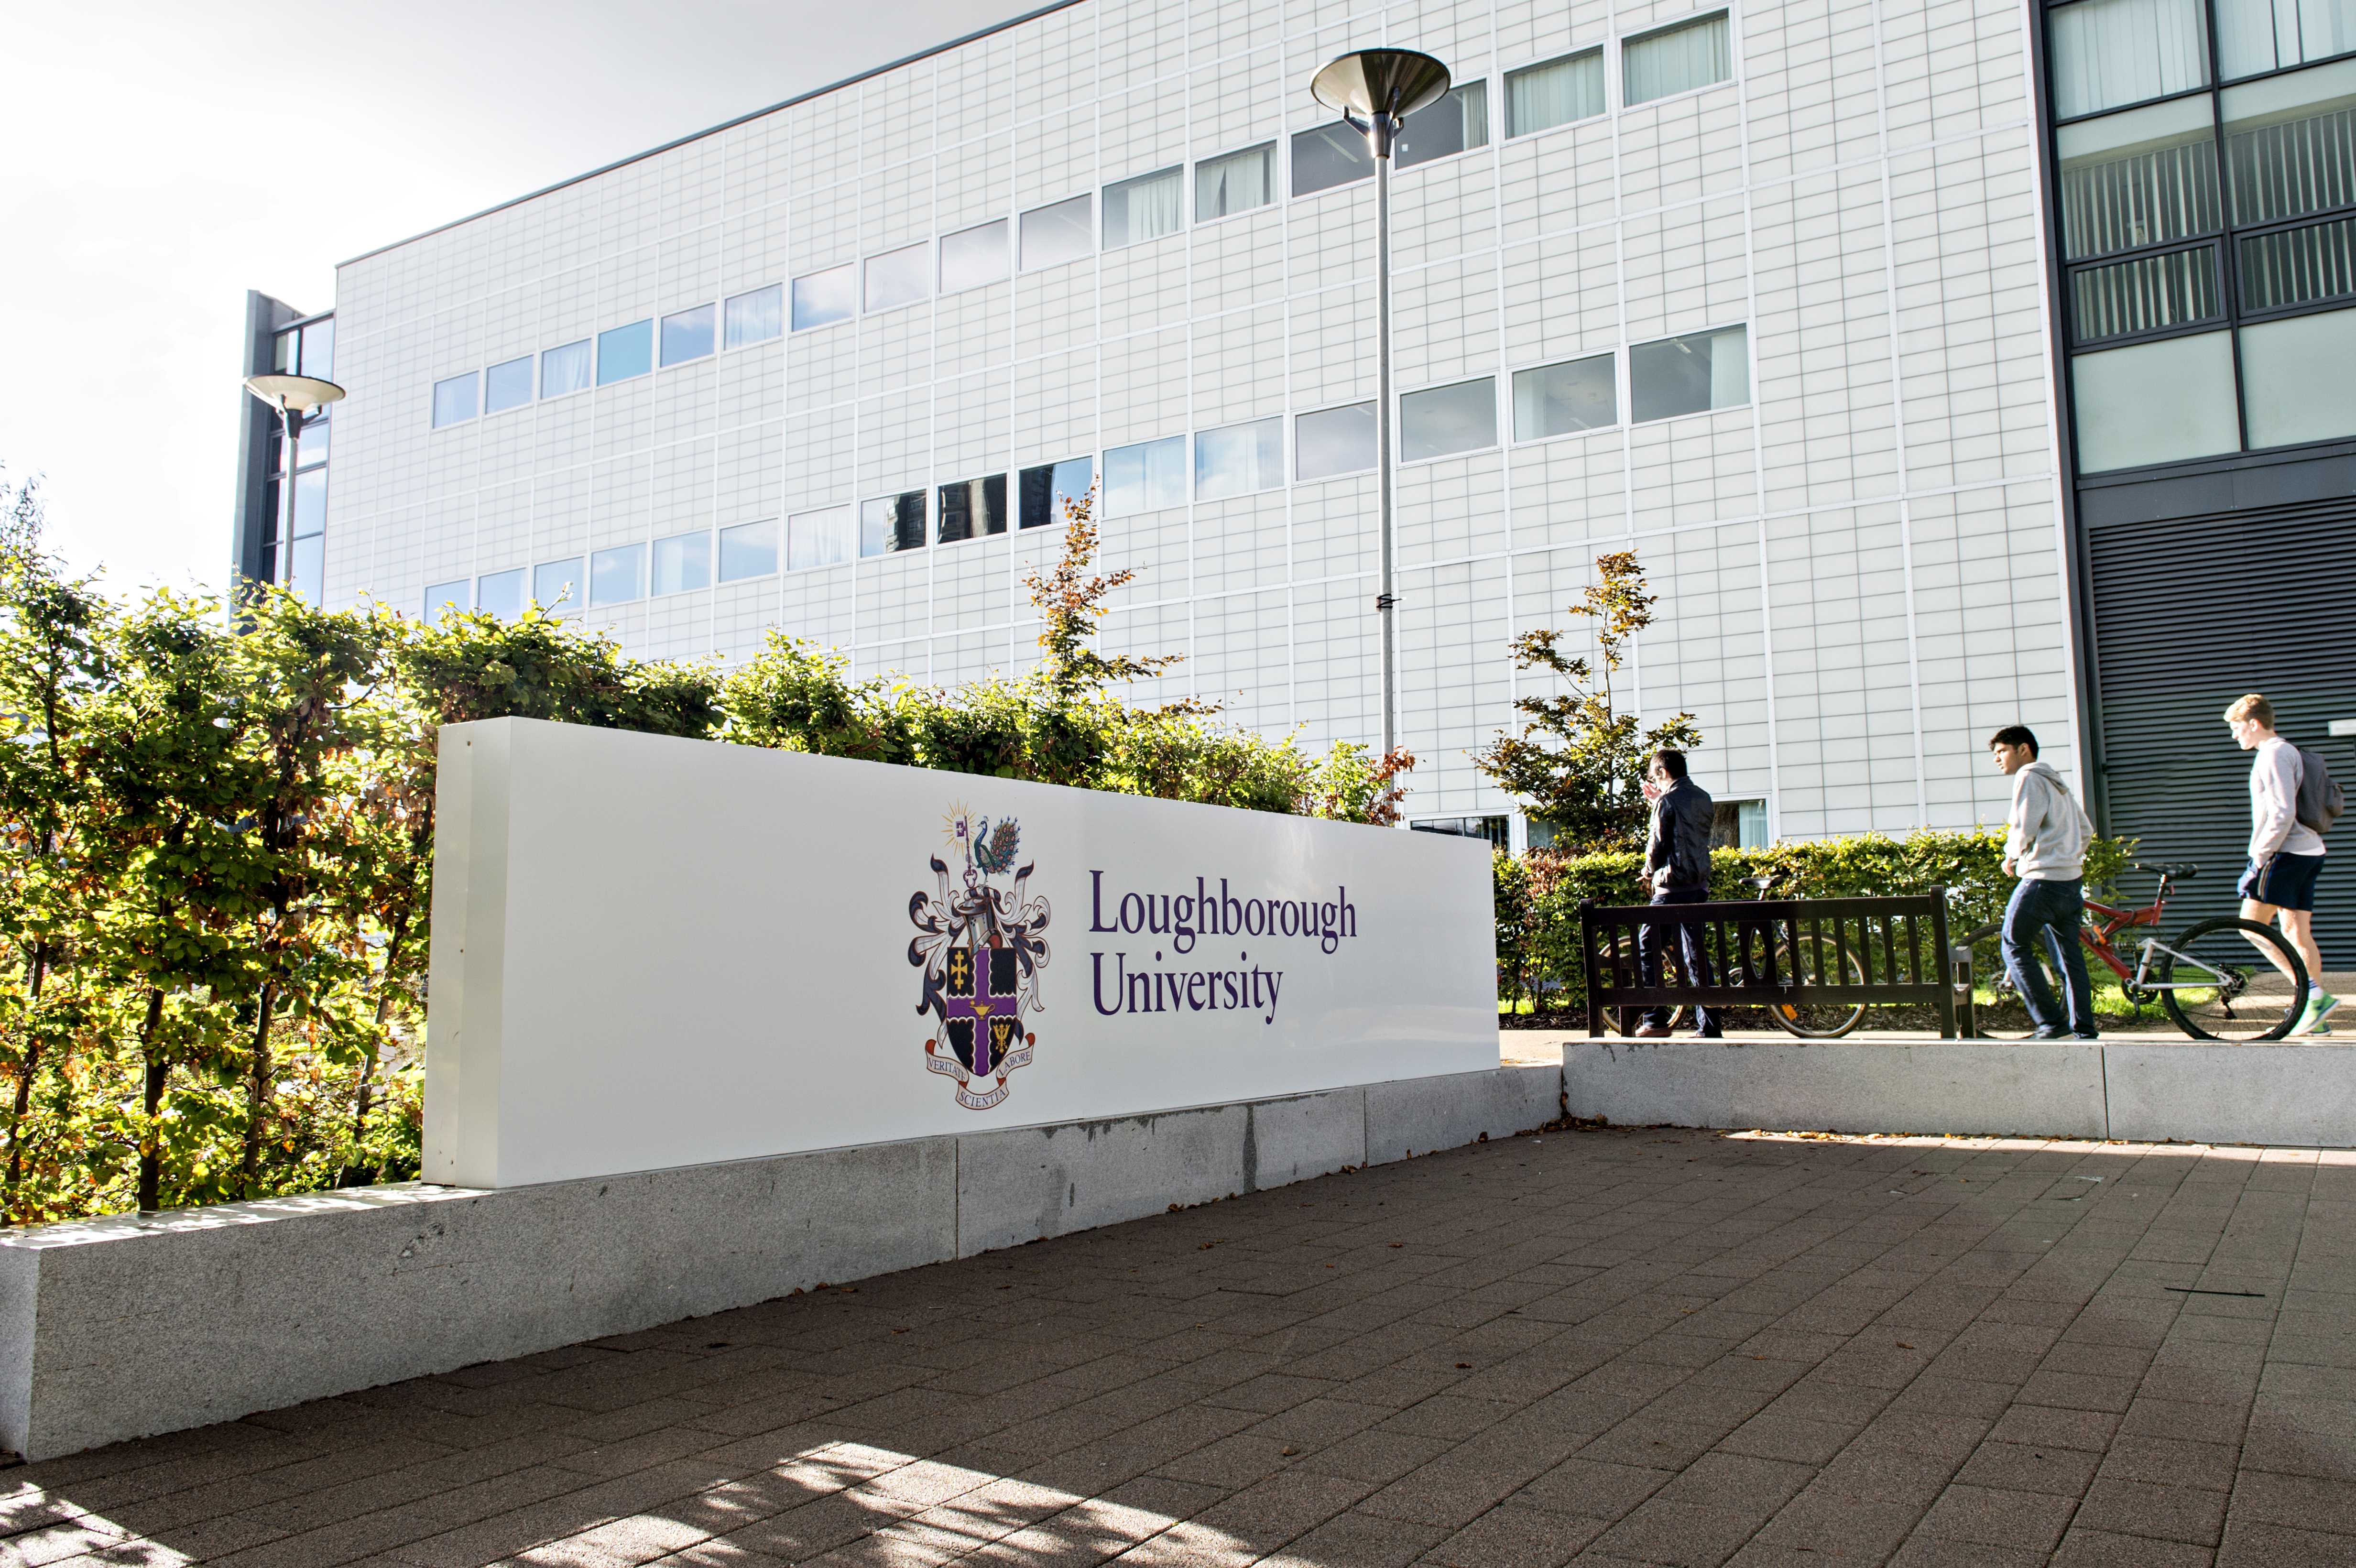 Loughborough University main entrance sign